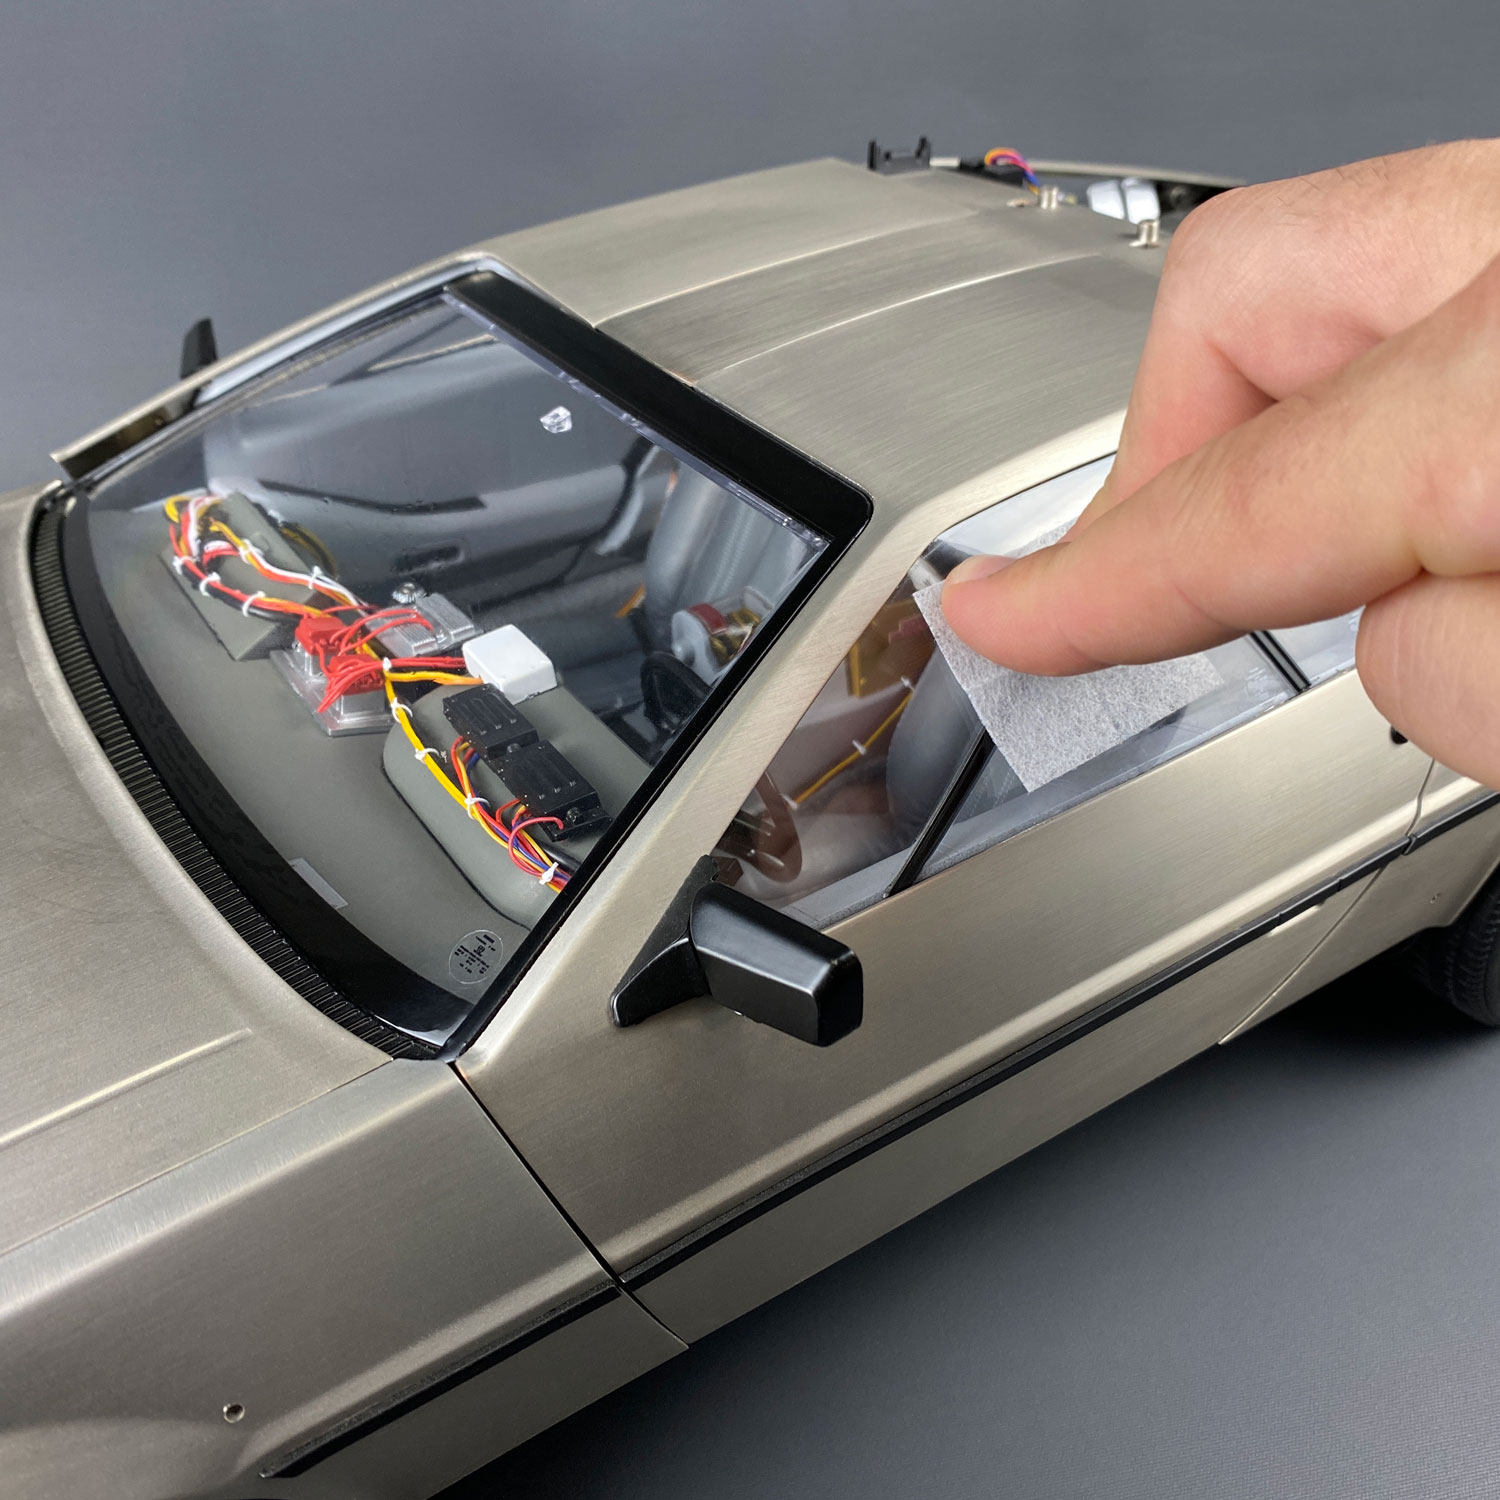 Using screen cleaner wipe on DeLorean driver's side window